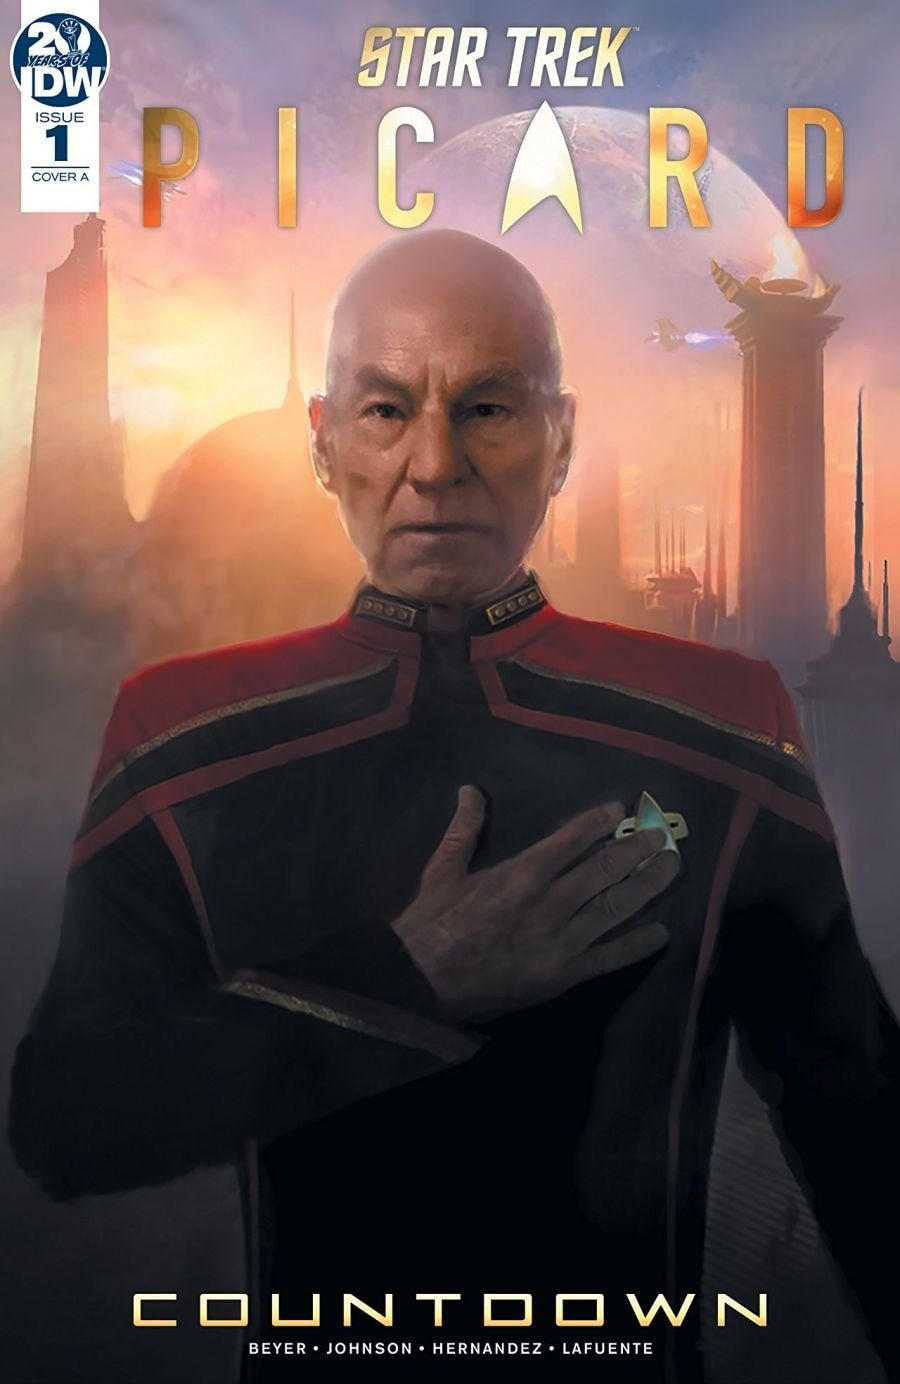 Star Trek Picard - Cuenta atrás # 1